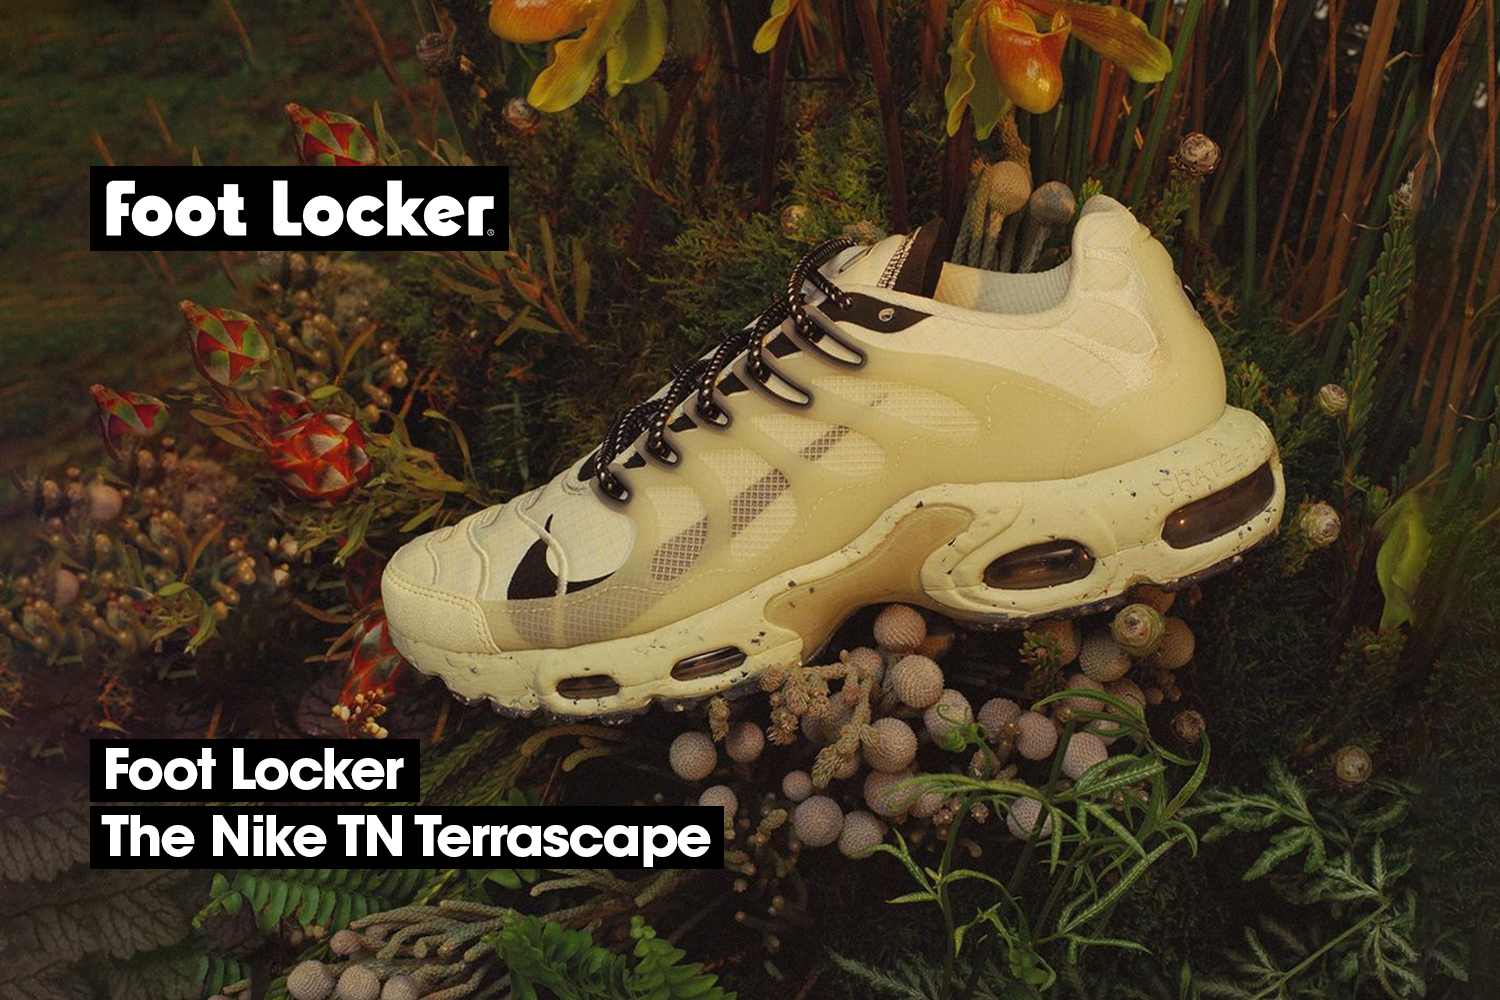 De Nike TN Terrascape is terug bij Foot Locker